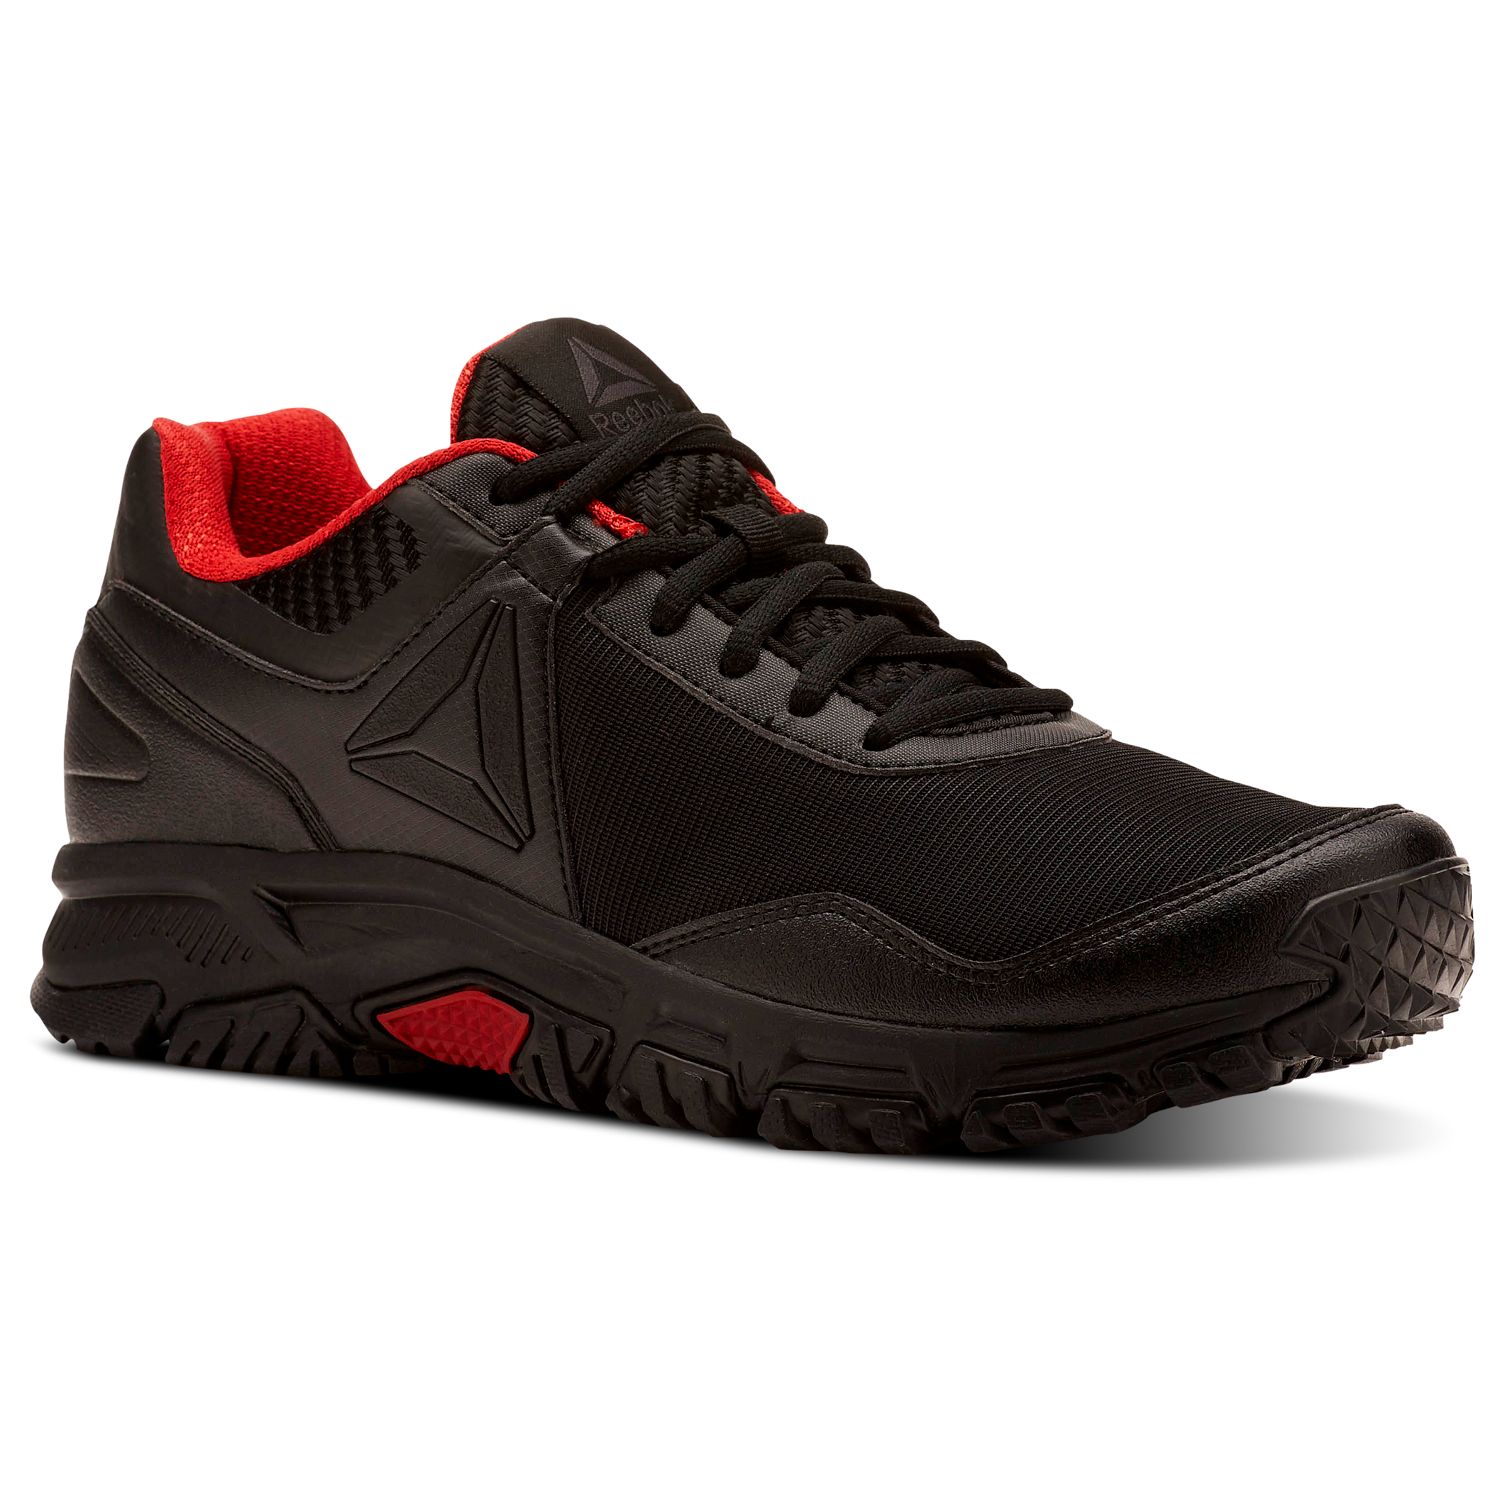 reebok men's ridgerider trail 3.0 shoes